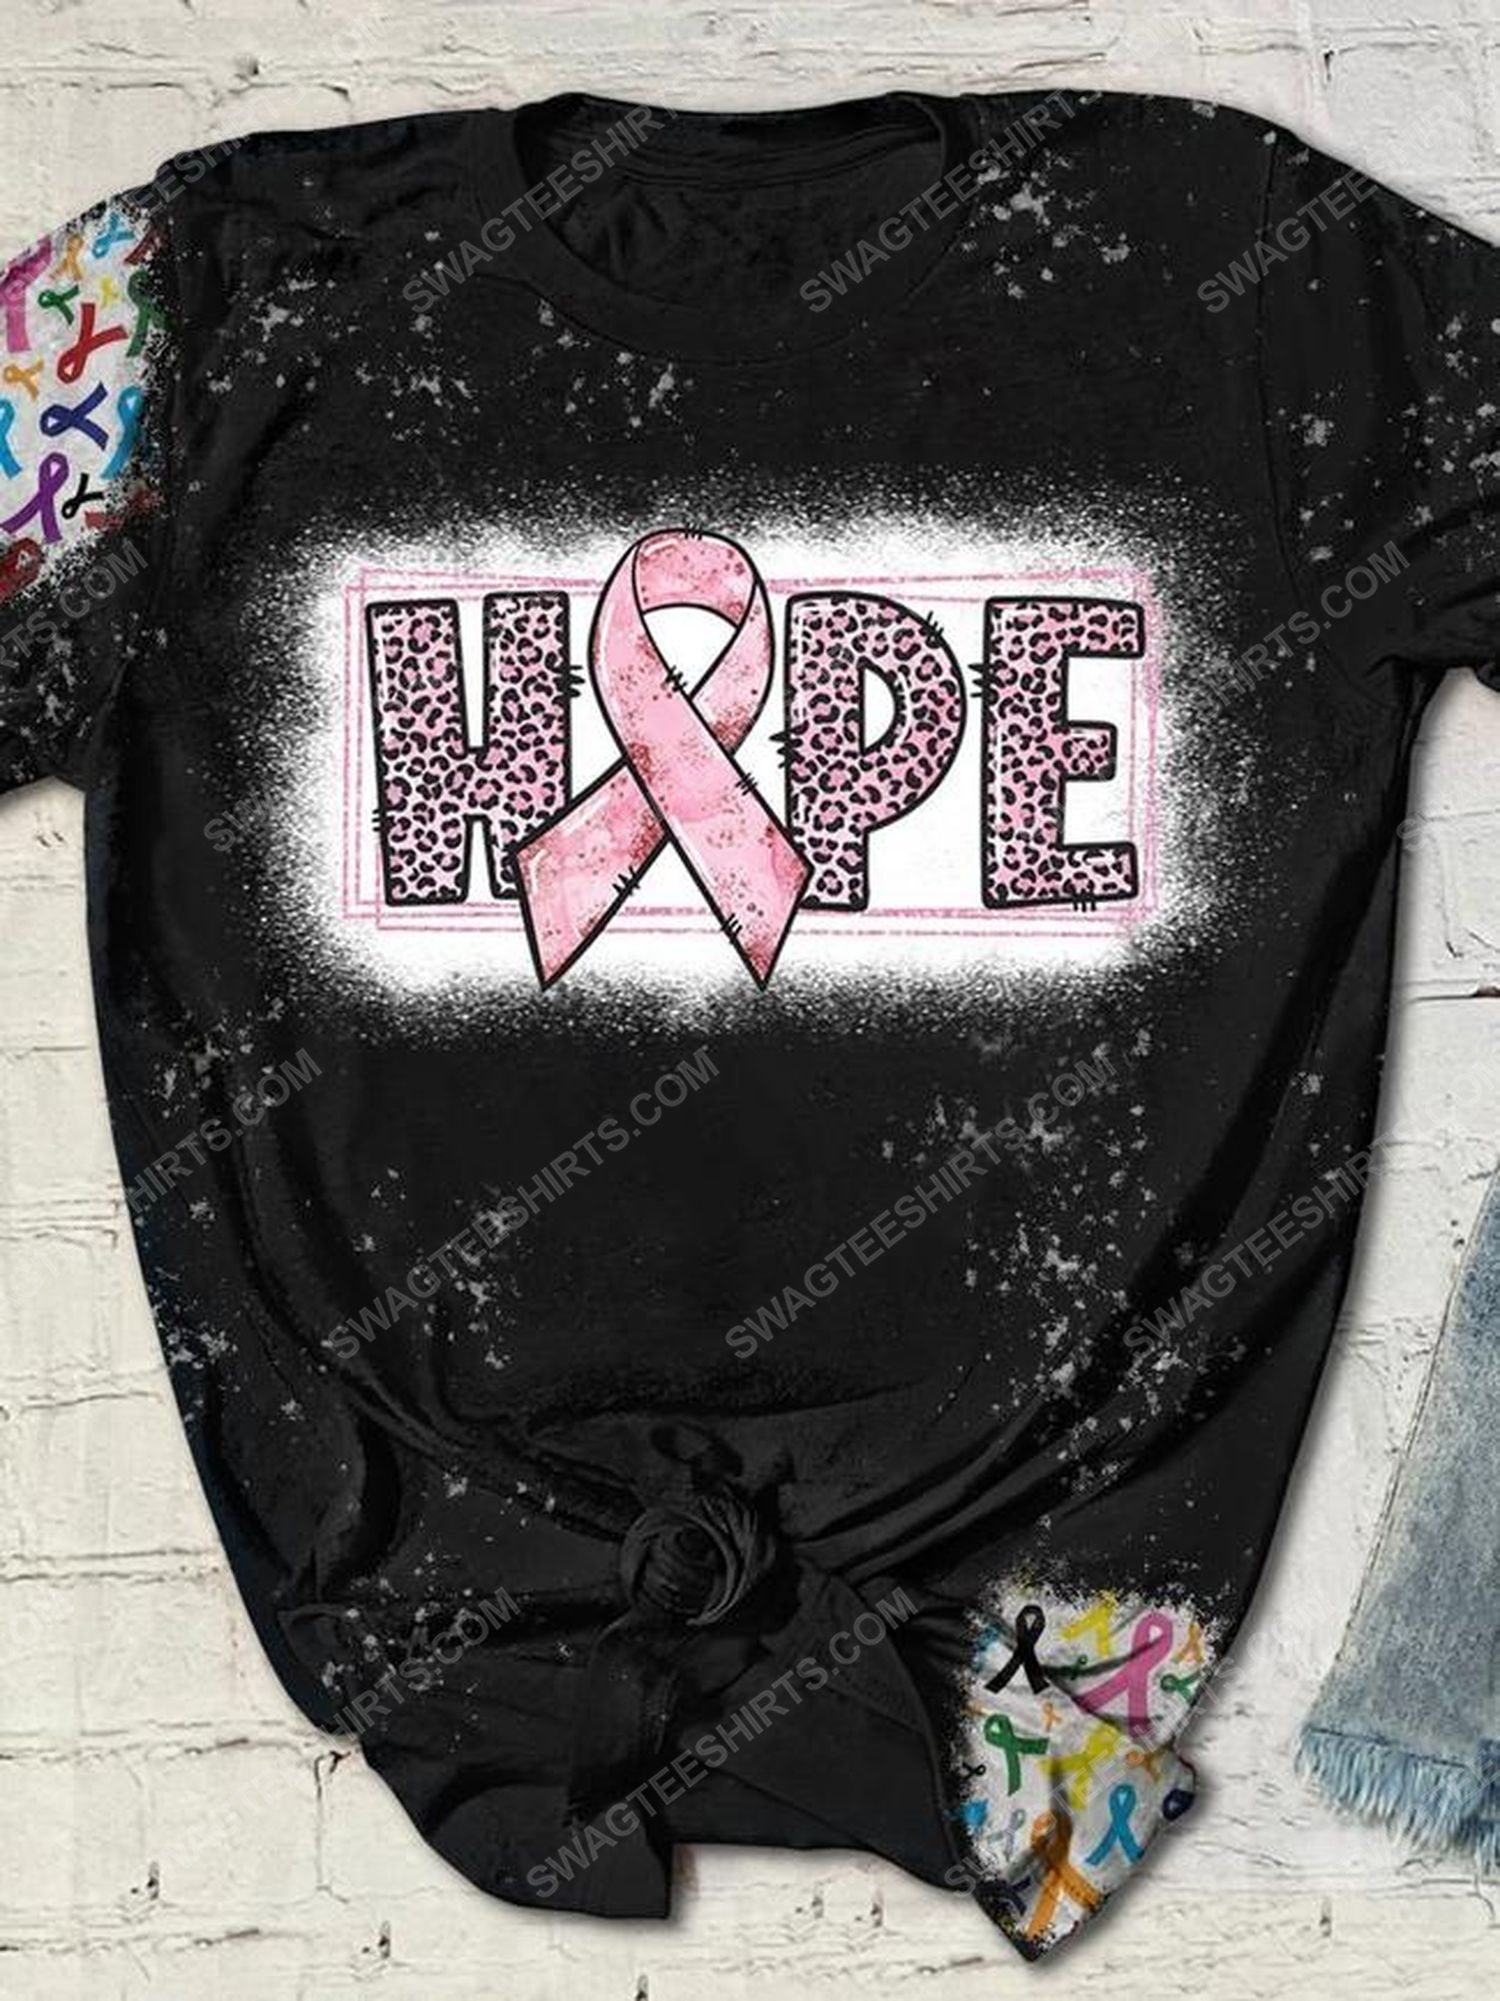 Breast cancer awareness hope full print shirt 1 - Copy (3)